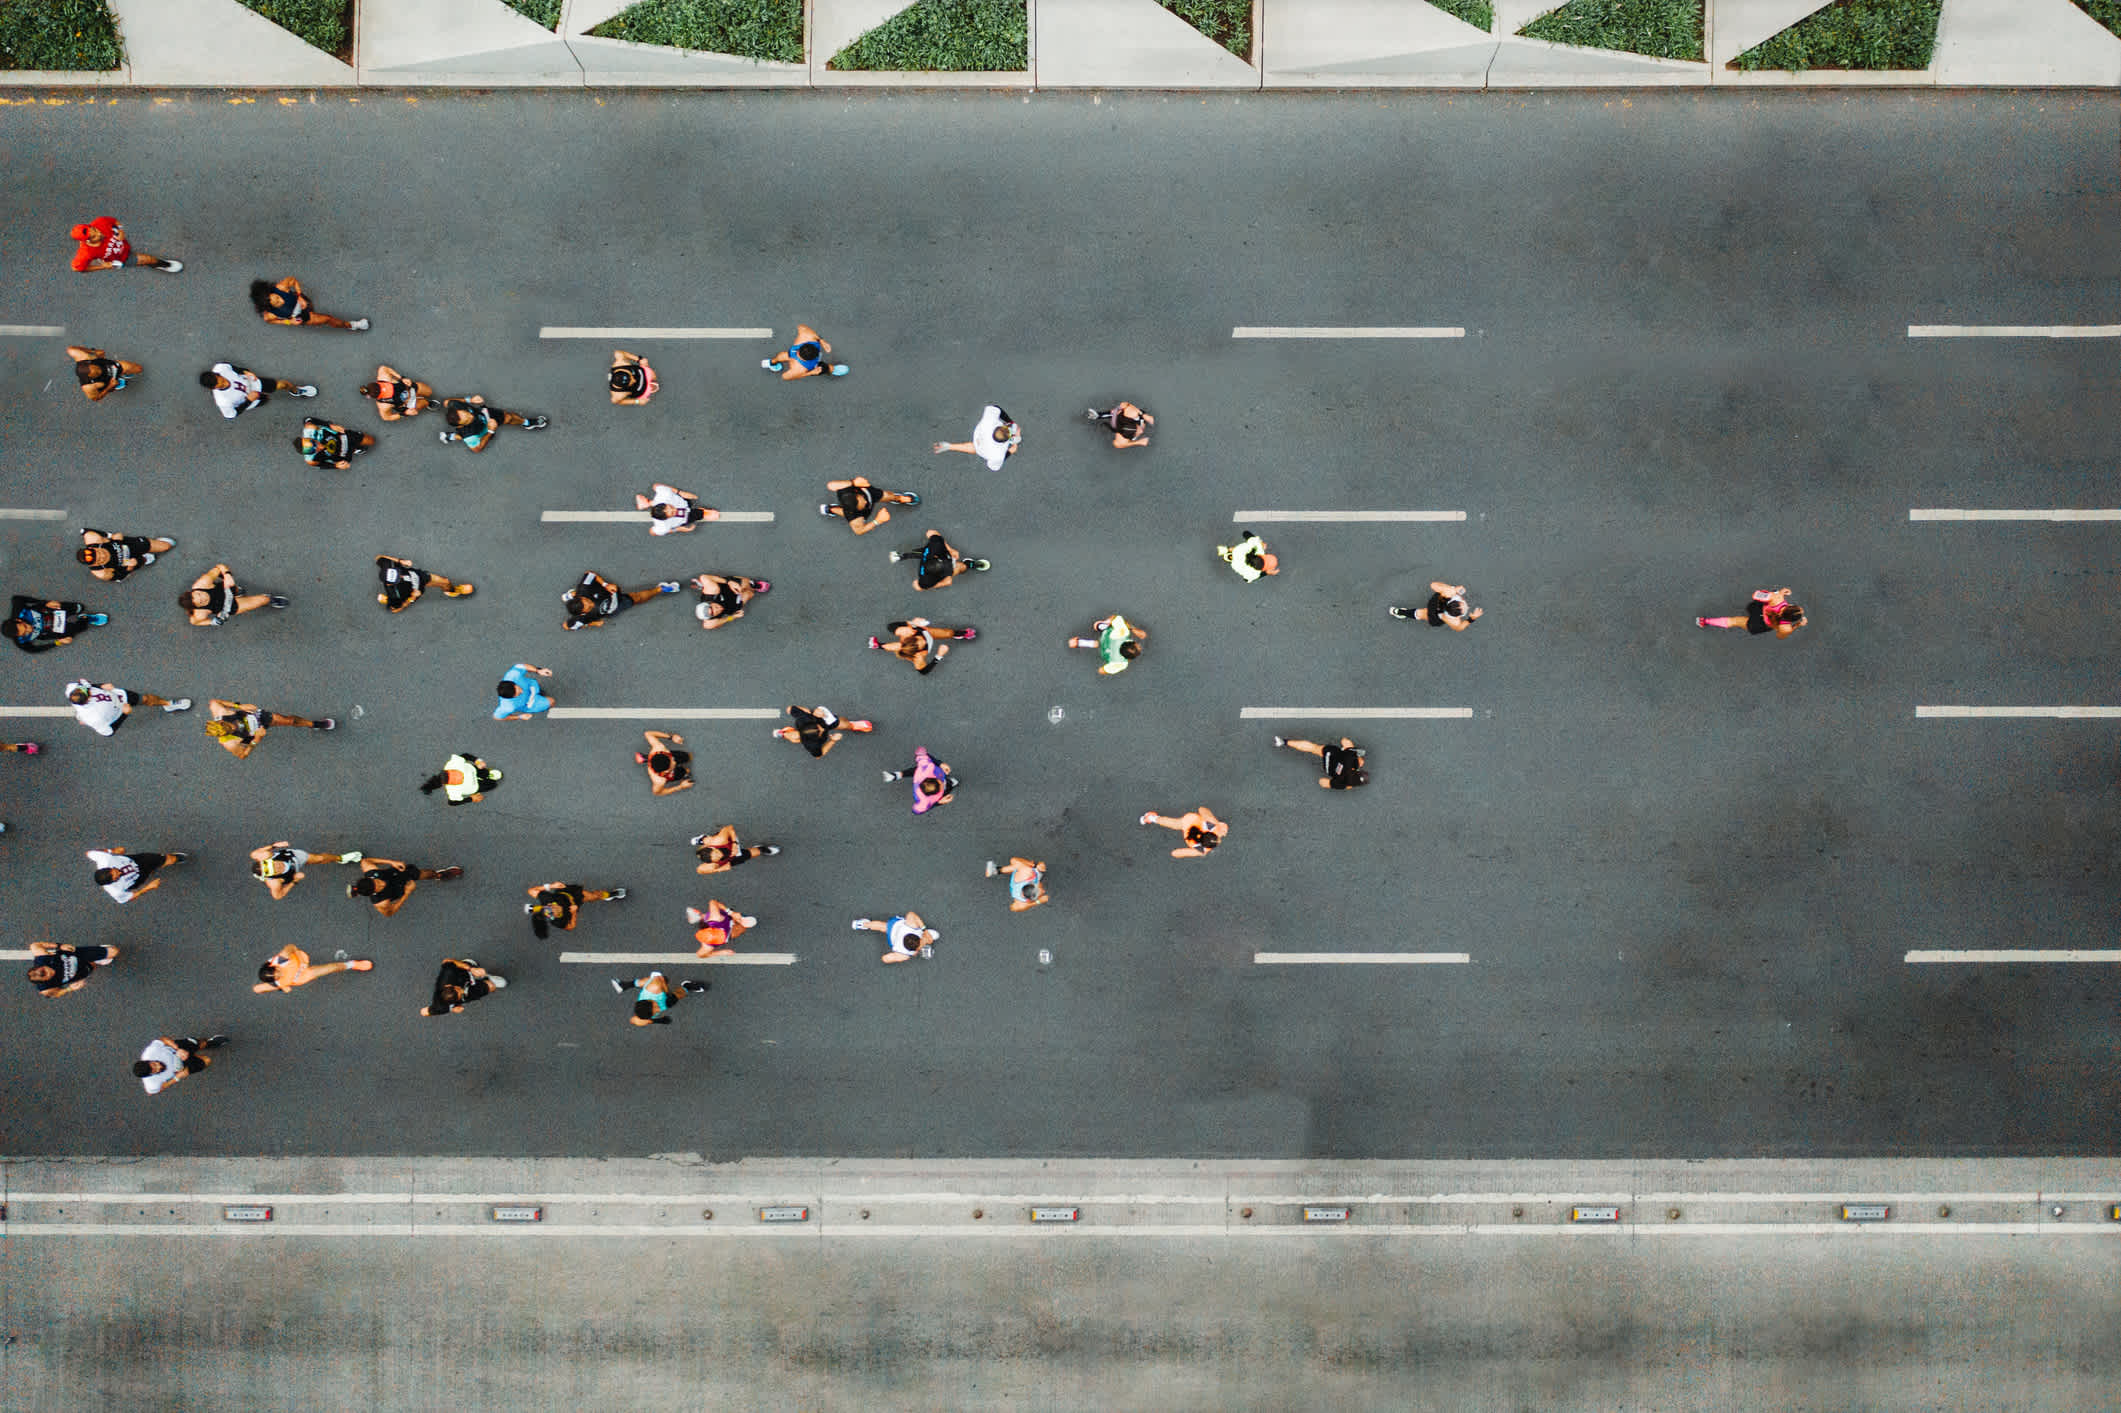 Aerial view of marathon city runners. One person leading marathon. | Watermark

